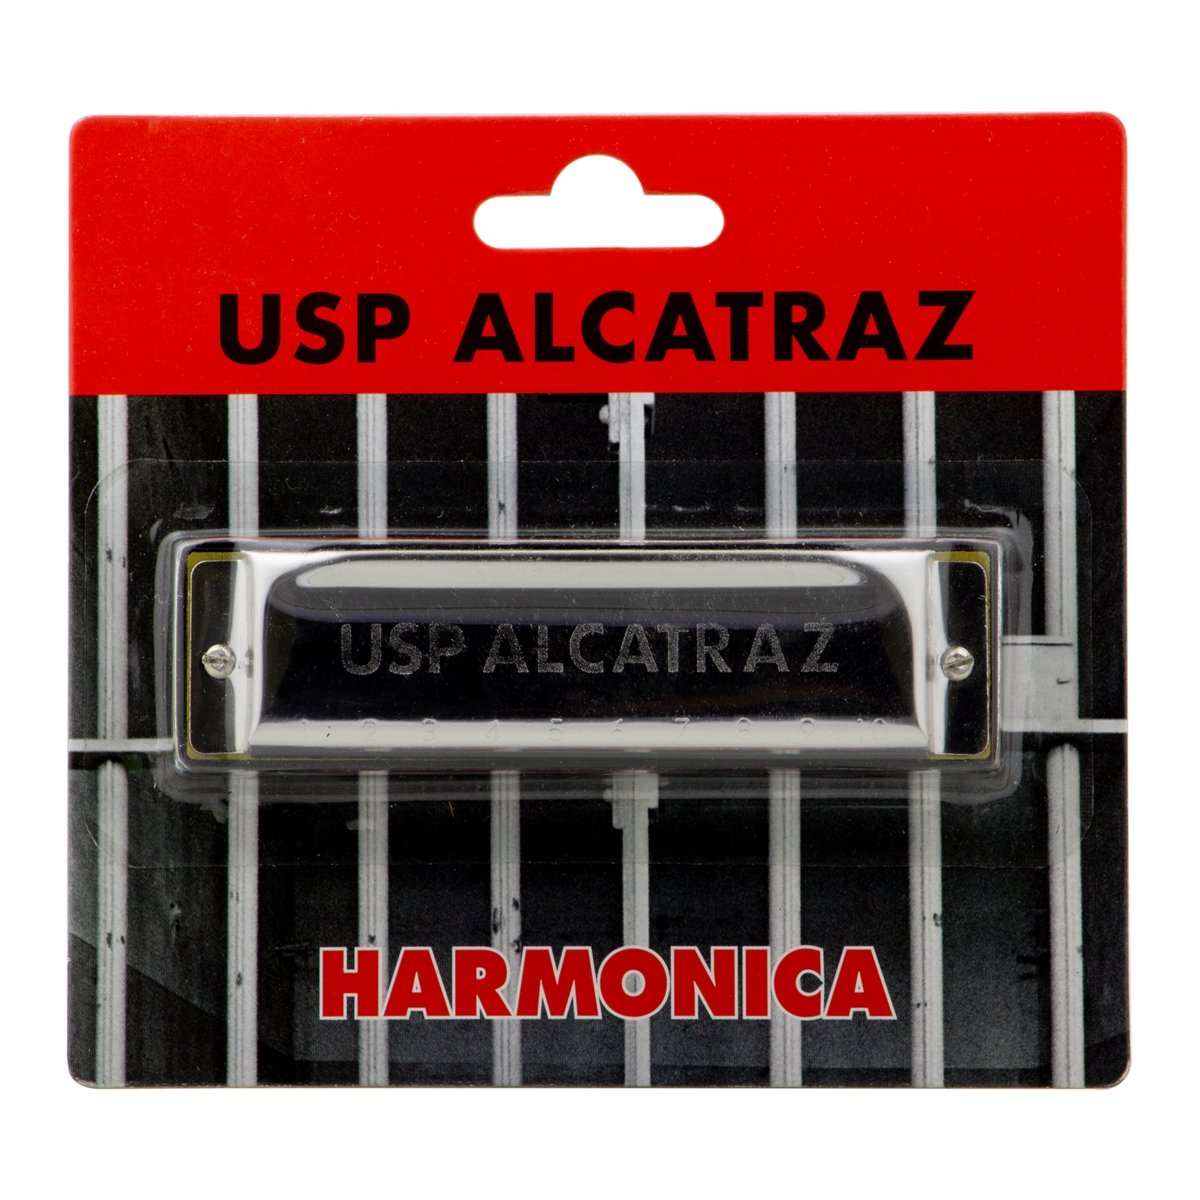 Replica US Penitentiary Alcatraz harmonica in gift packaging.